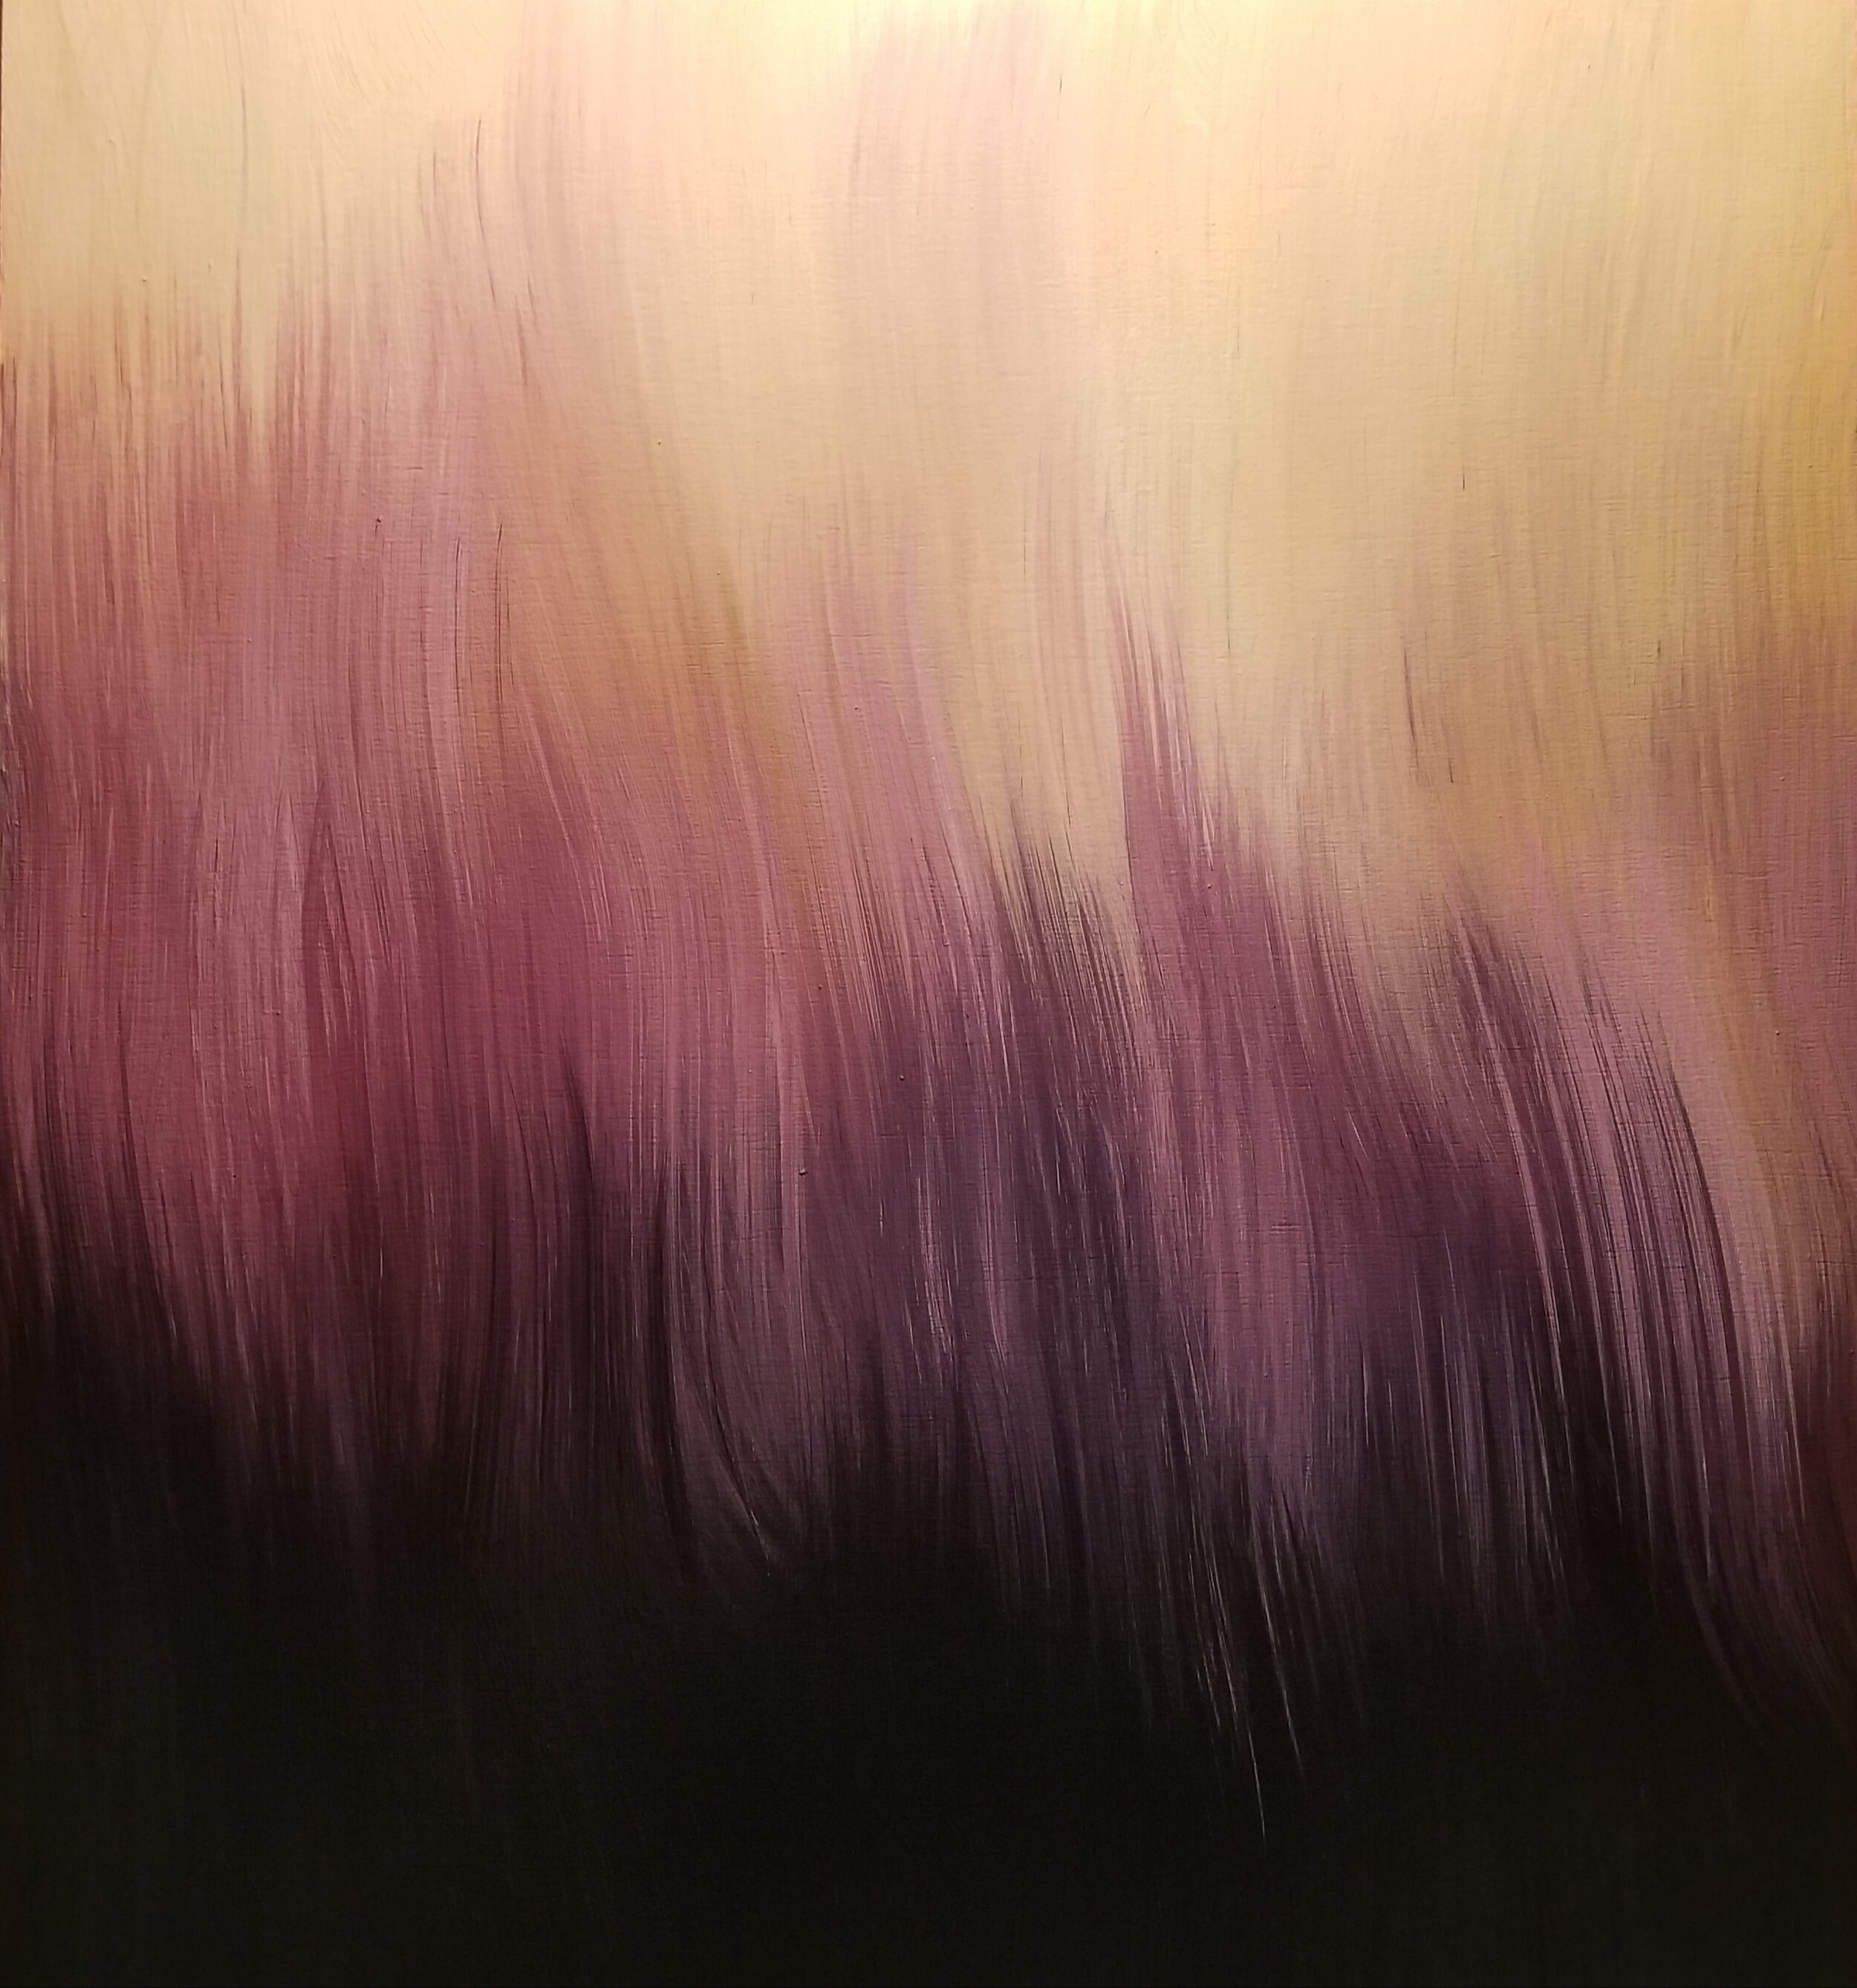 Untitled, March 8, 2020, Oil on Wood Panel, 18 x 16 by Geoffrey G. Harrison.jpg